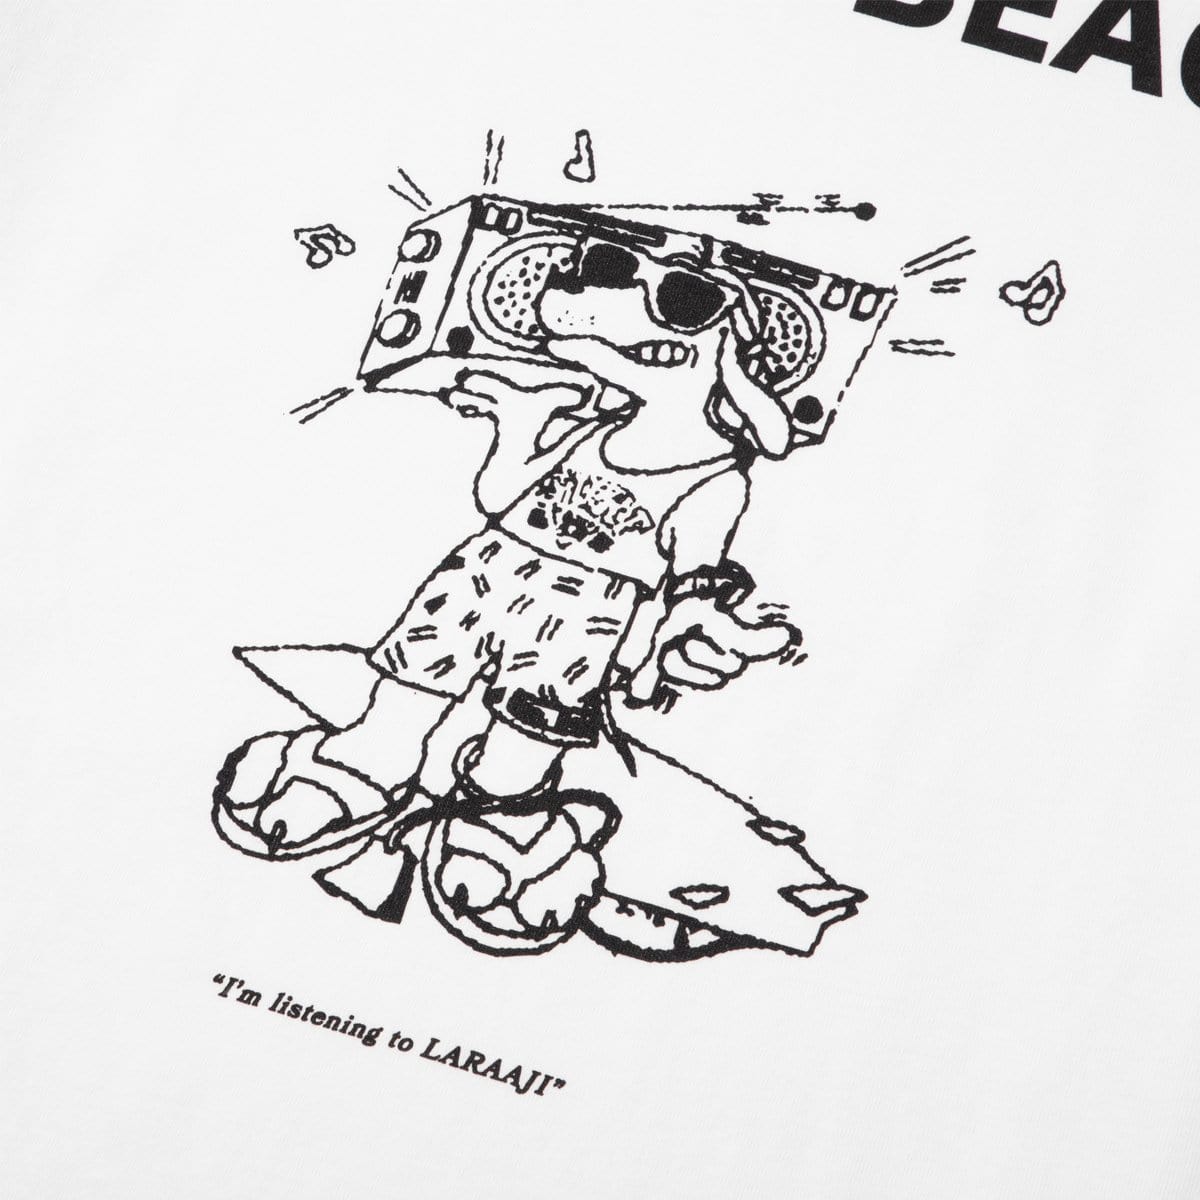 Mister Green T-Shirts VENICE BEACH DOG TEE